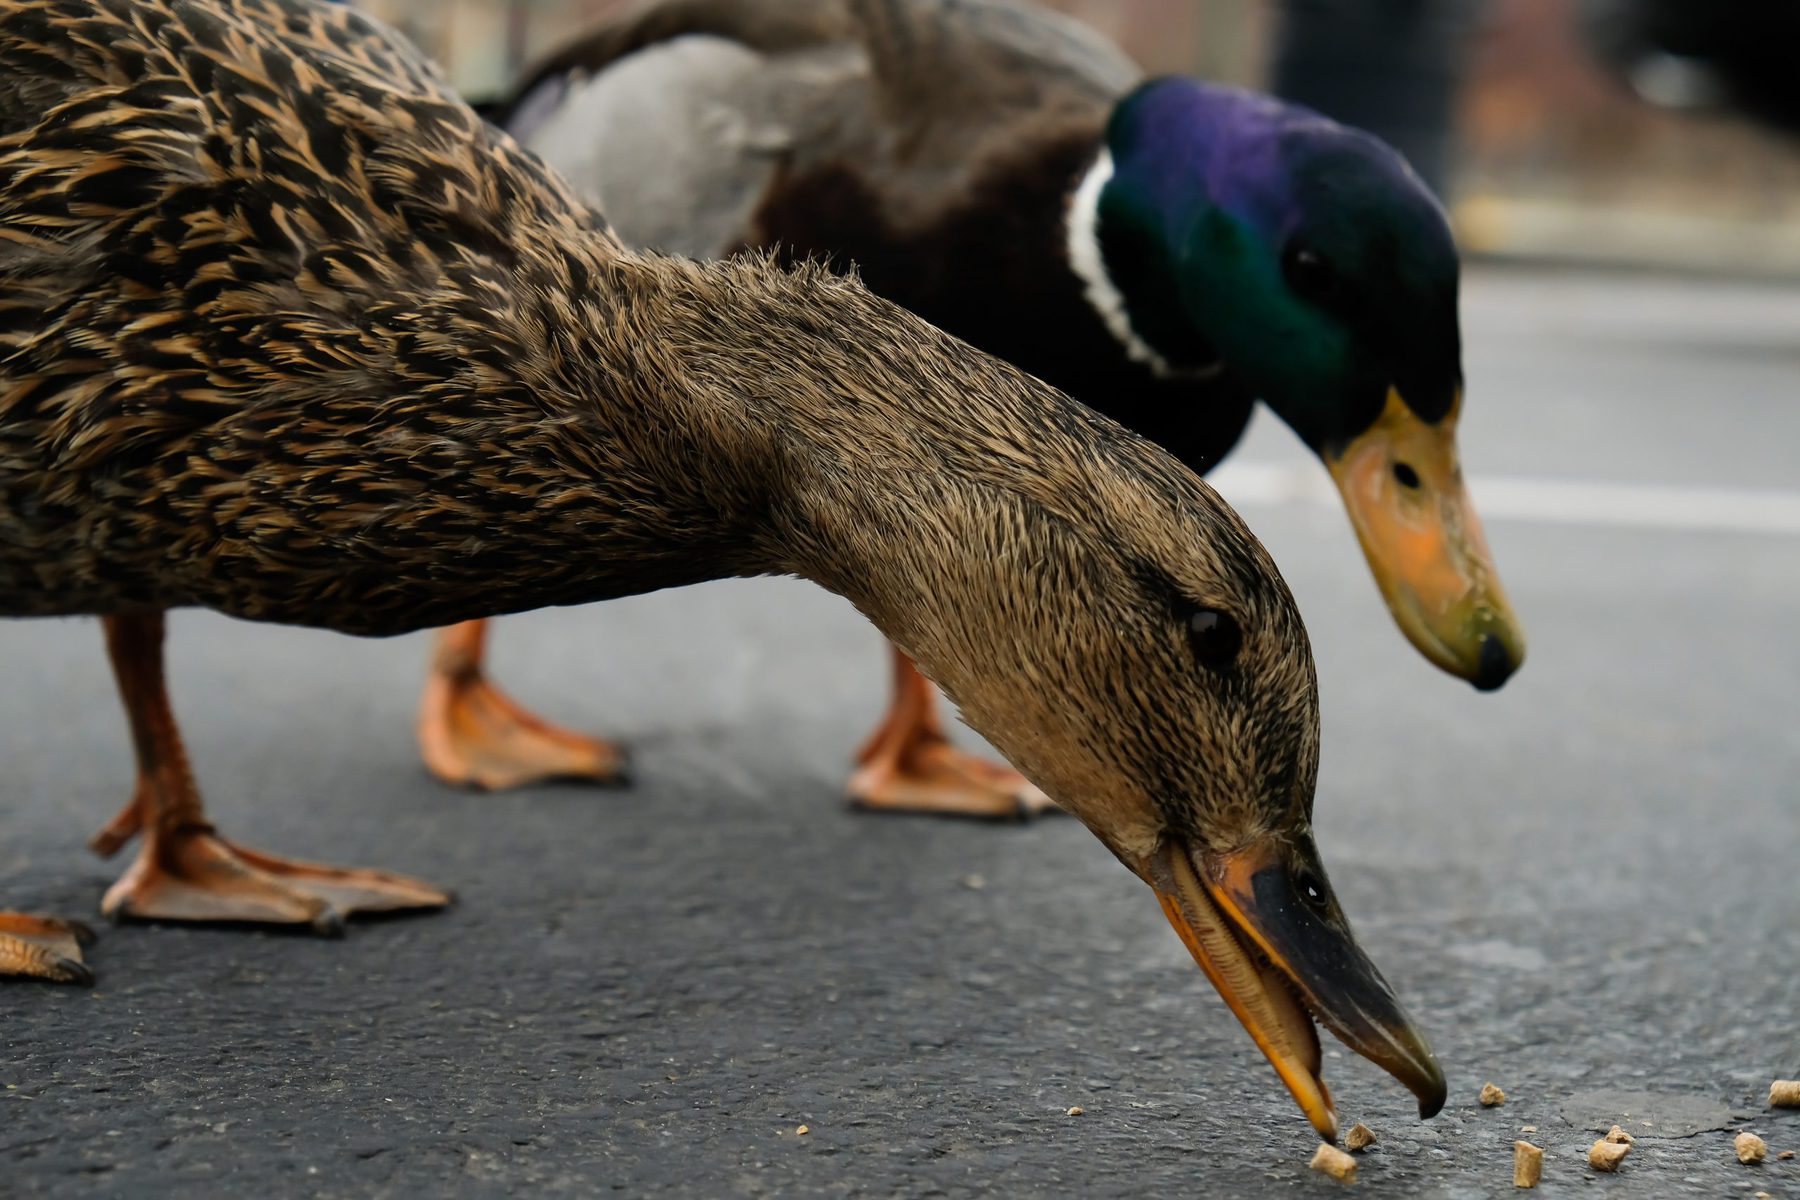 Ducks on Pavement